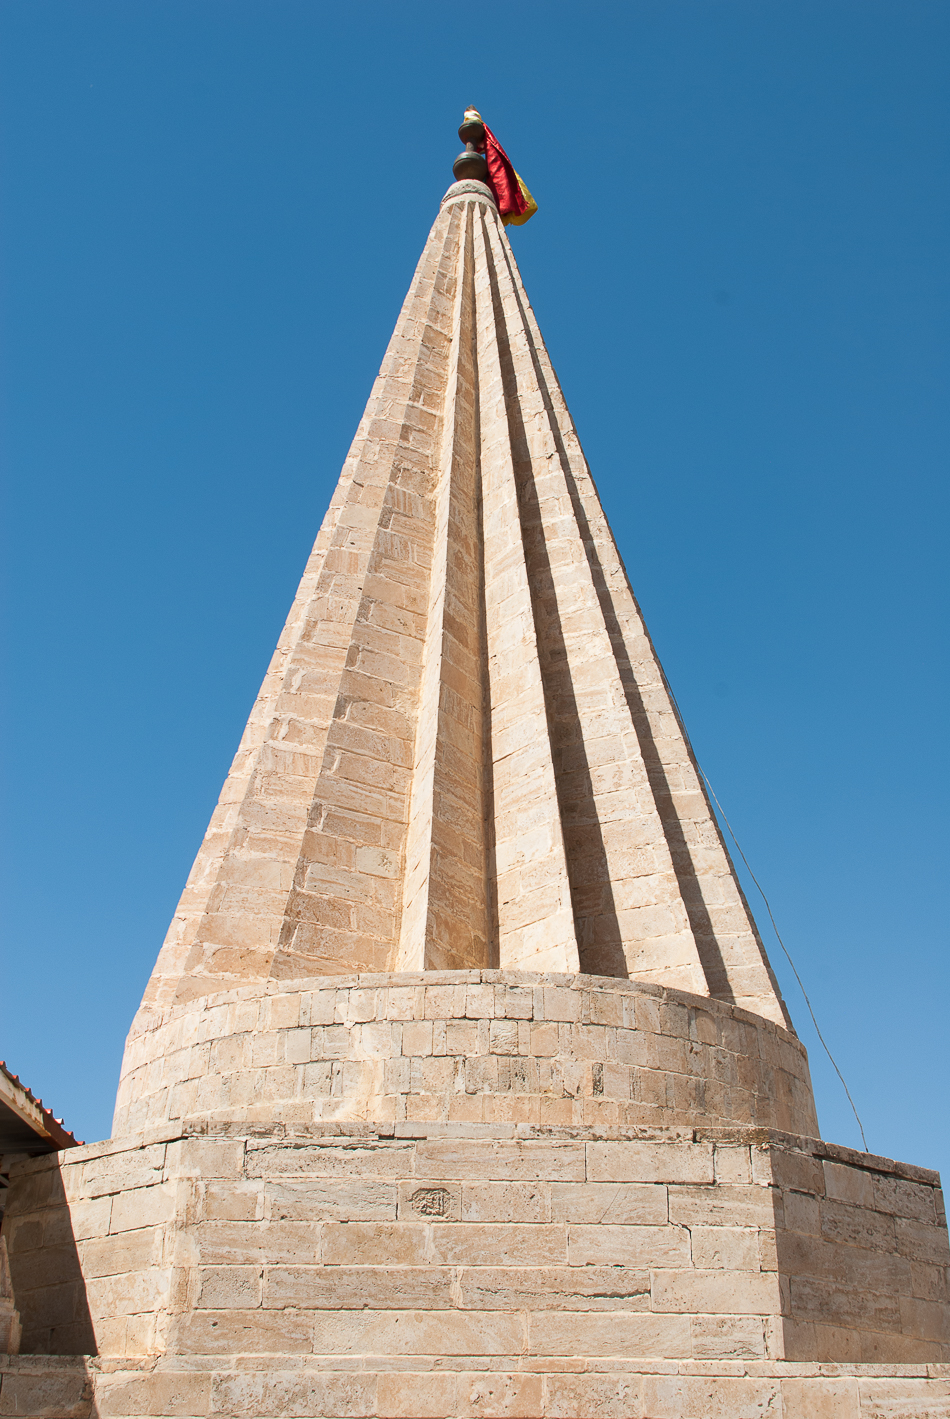 The Yazidi sultan ezid mausoleum in Mahad - Mesopotamia